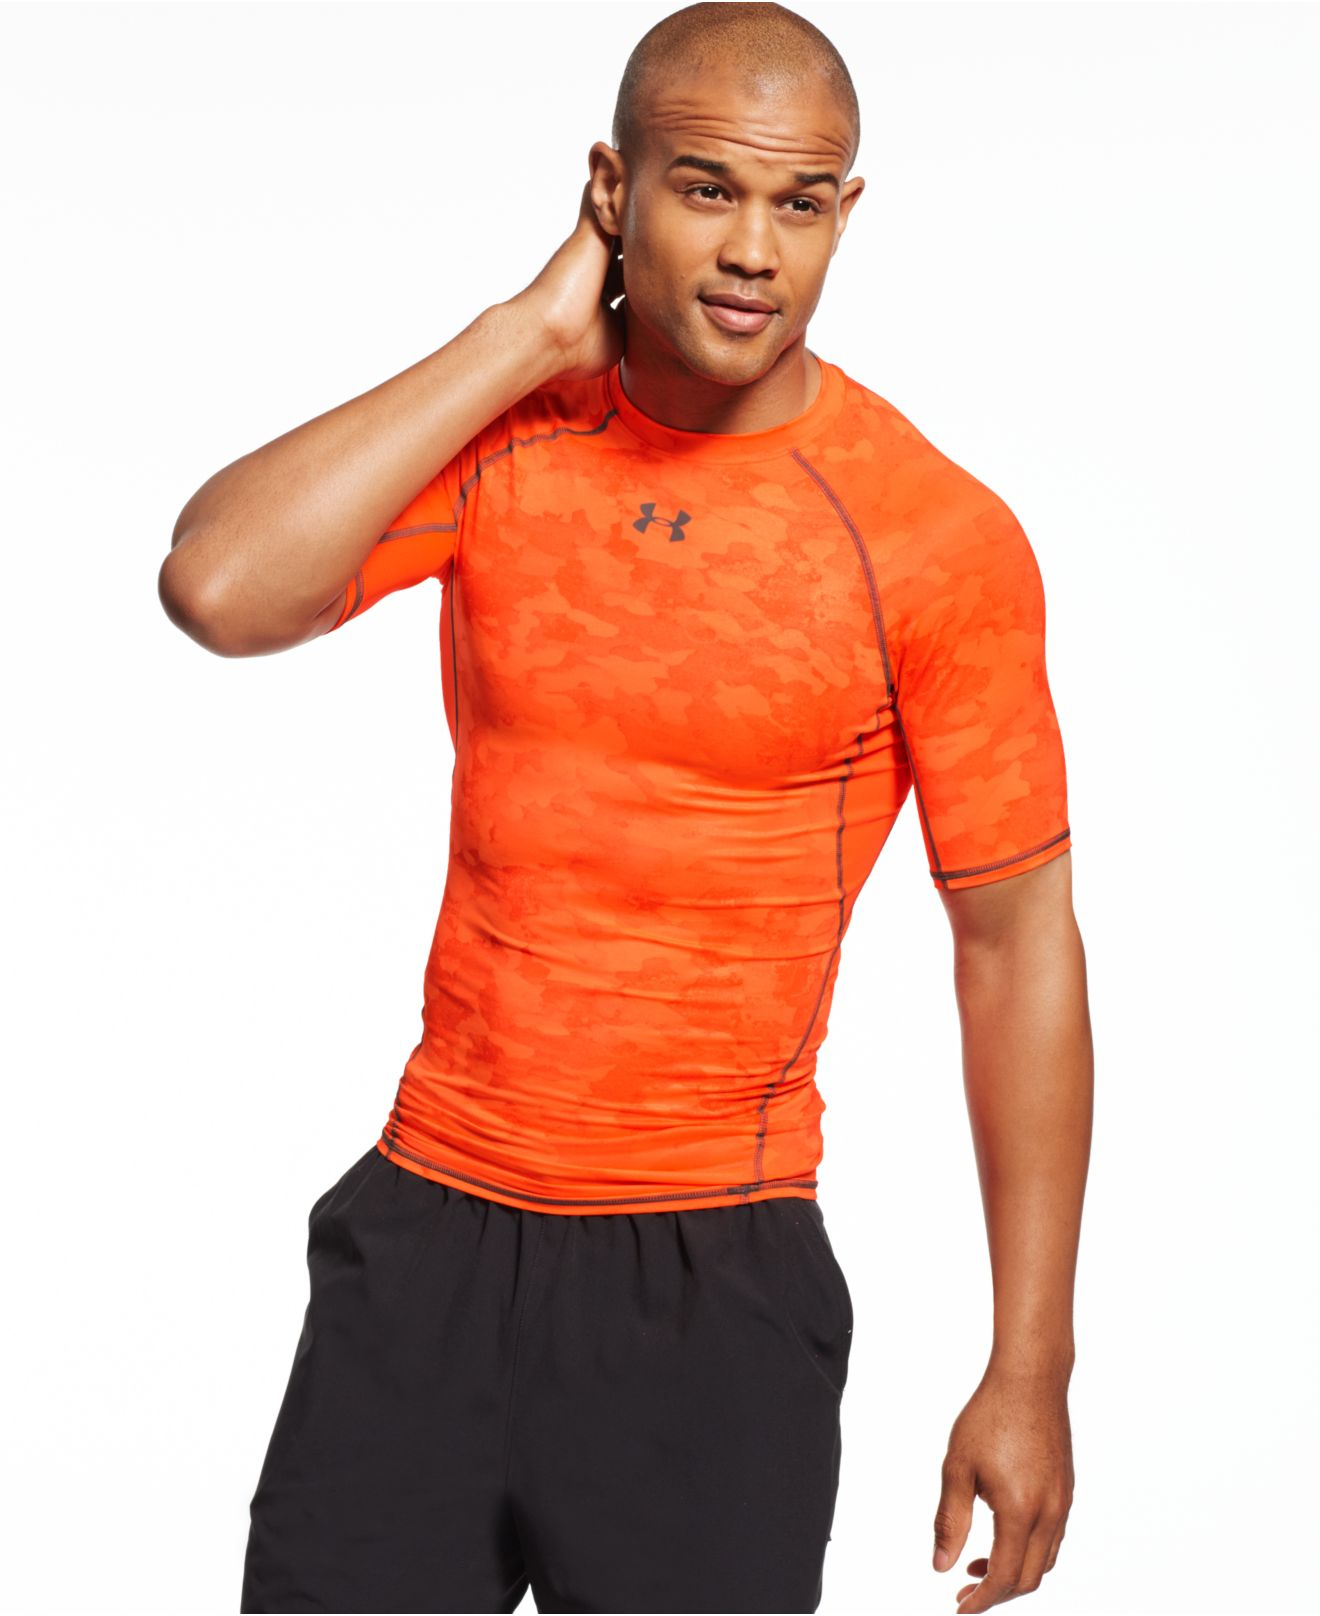 orange under armour compression shirt